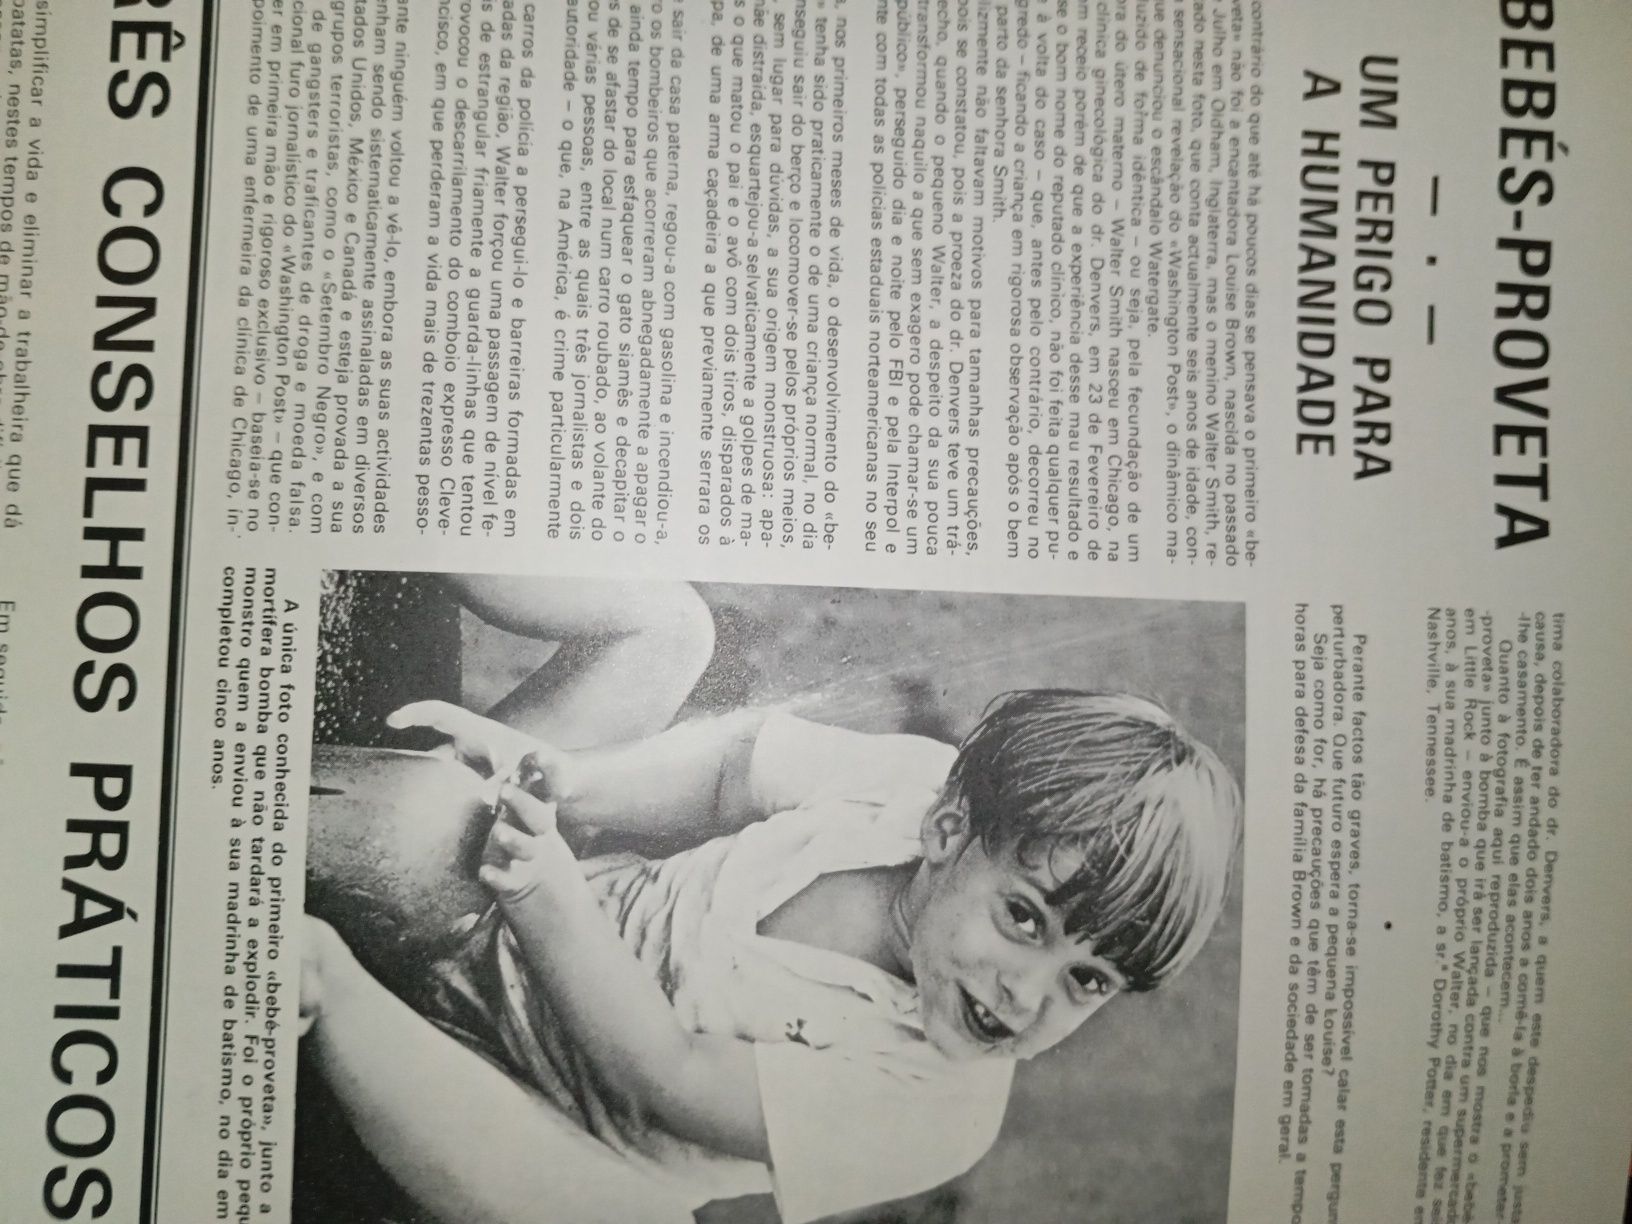 Gaiola aberta revista NR 72 1978